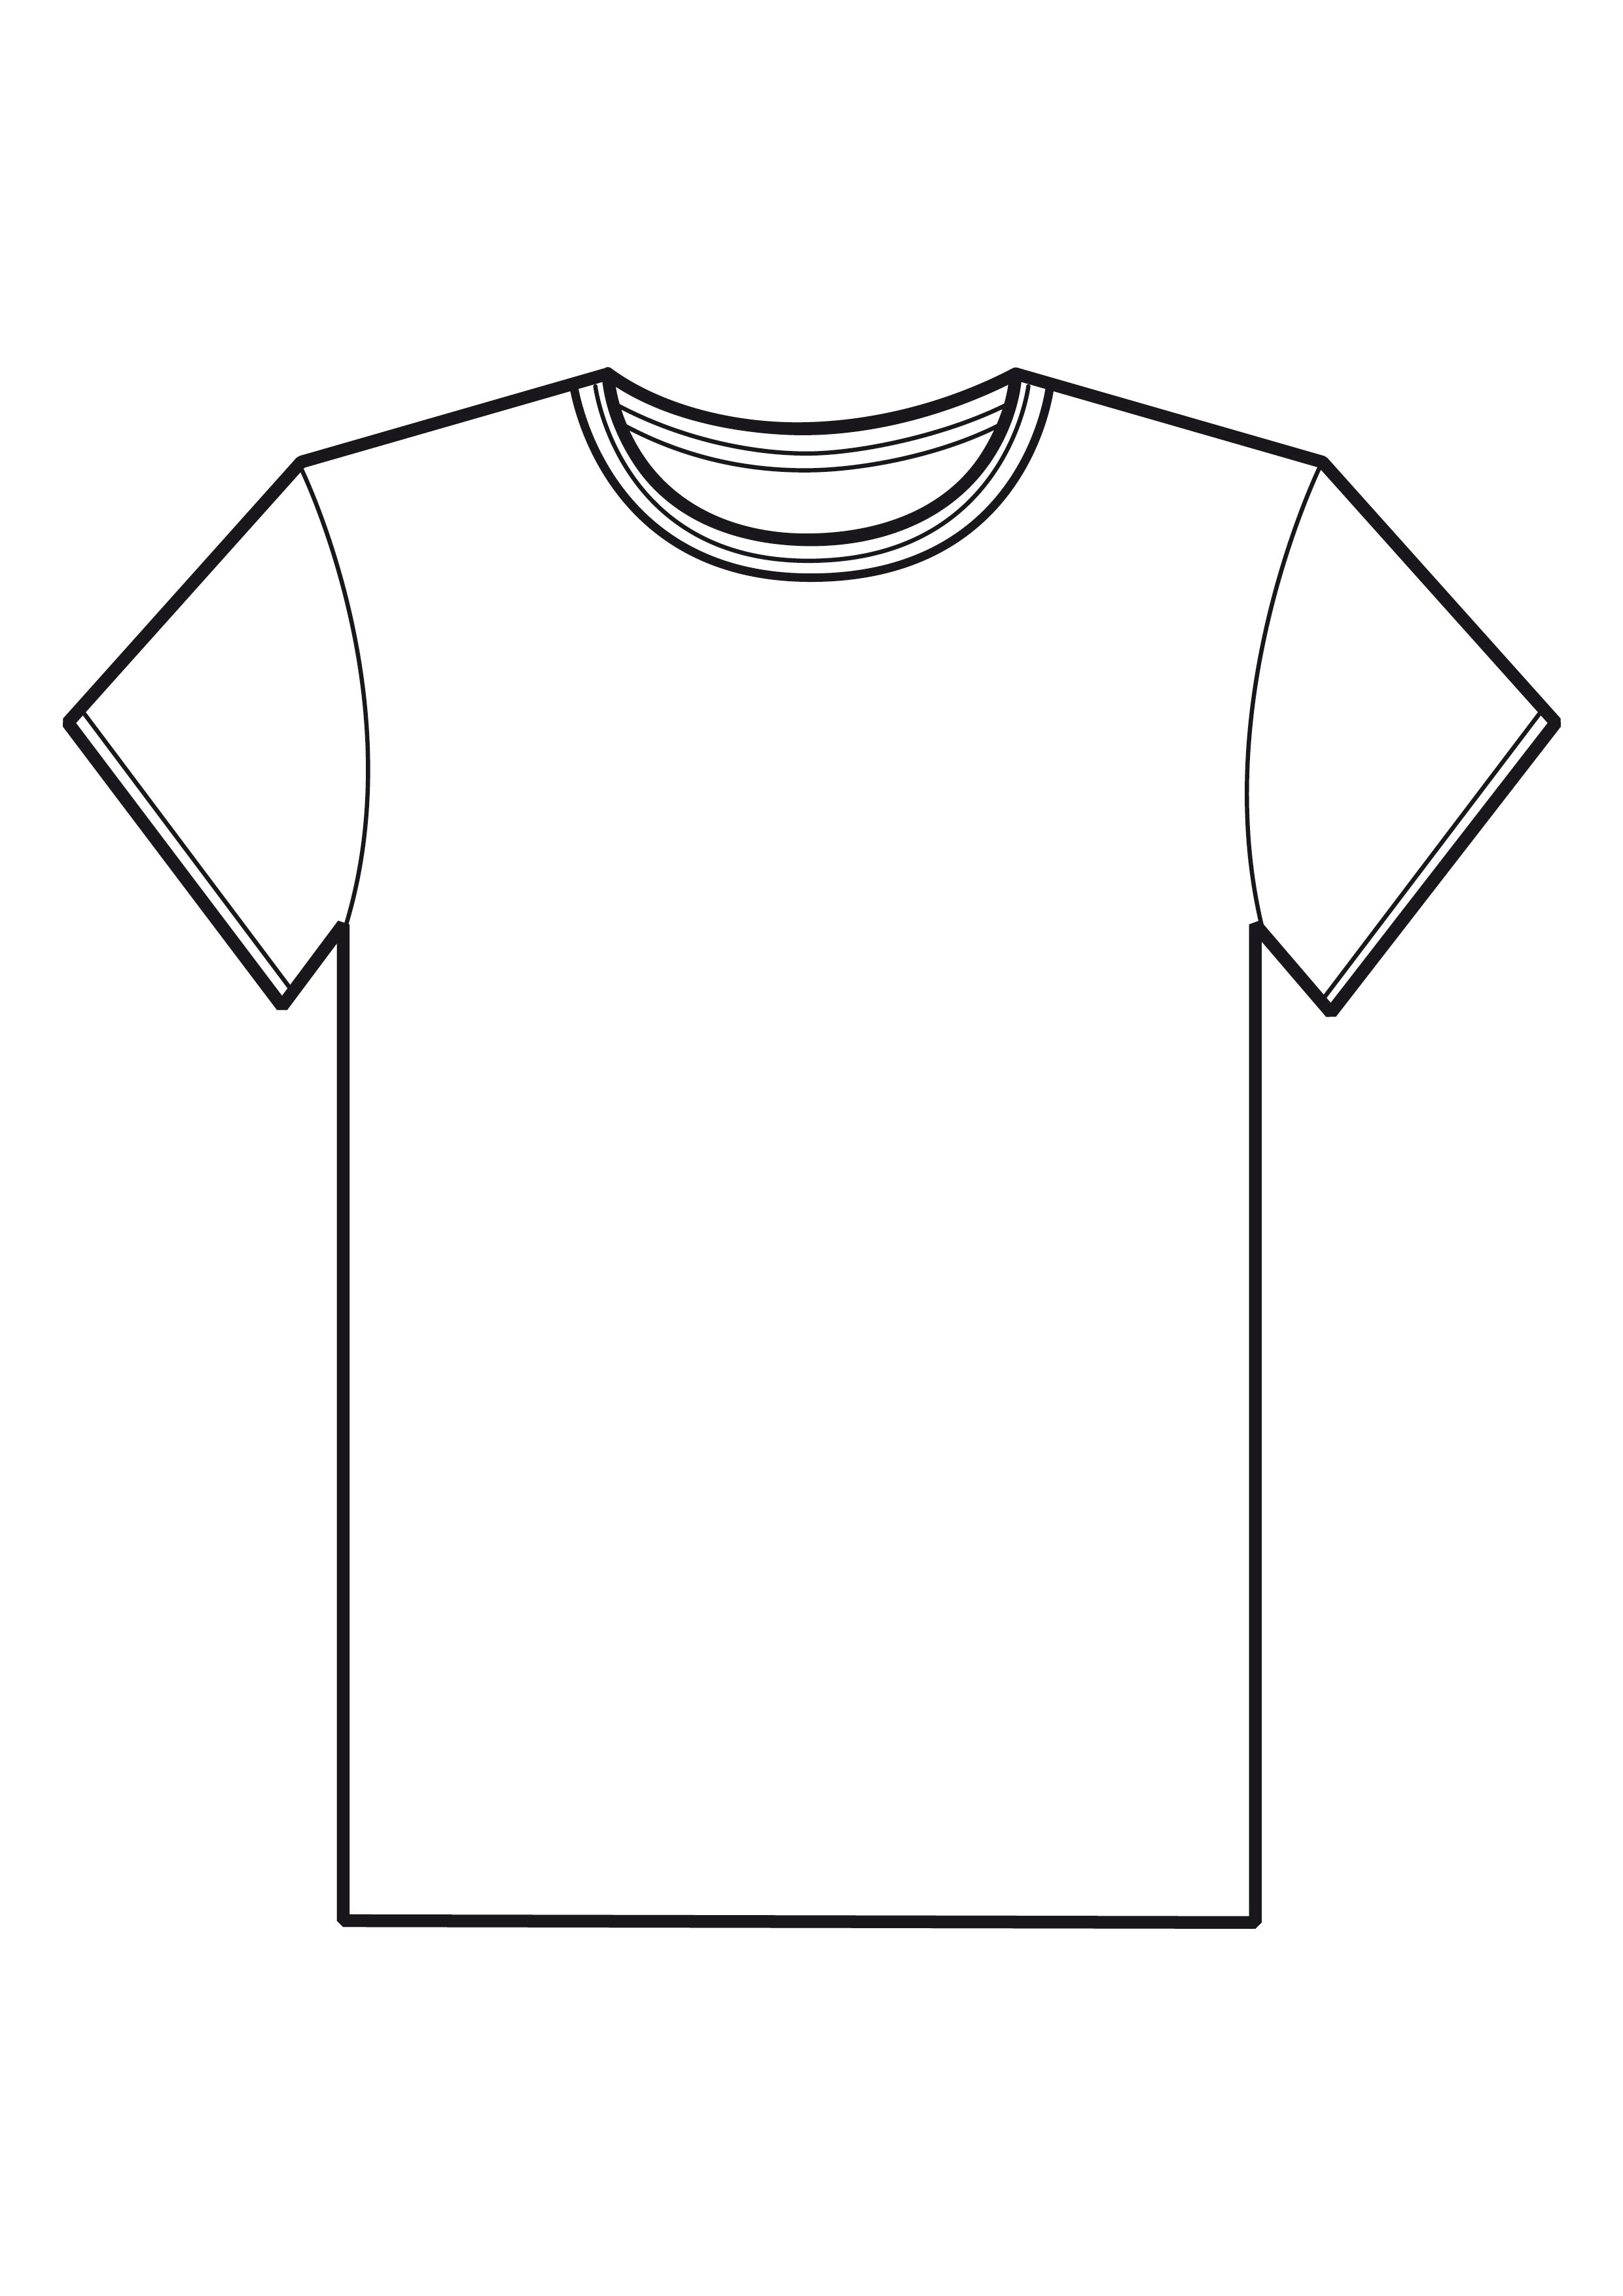 19 Blank T Shirt Clip Art Fre - White T Shirt Clipart